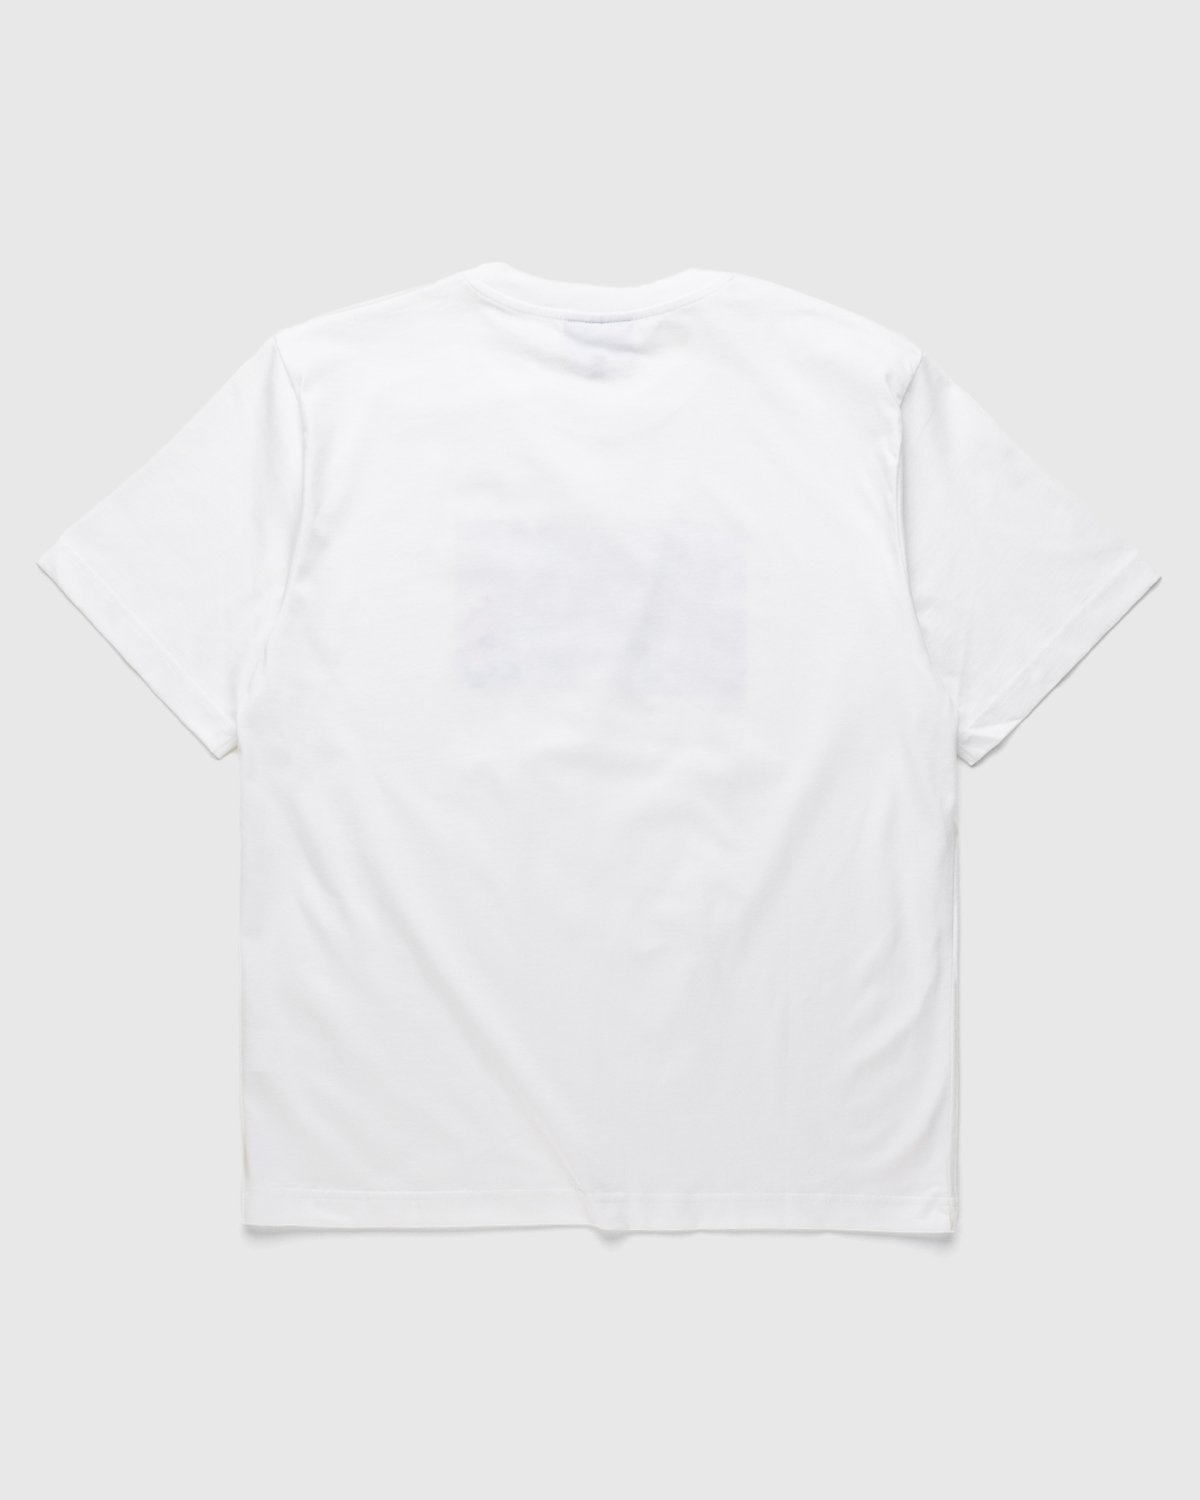 Carne Bollente - Tom's Cumback T-Shirt White - Clothing - White - Image 2